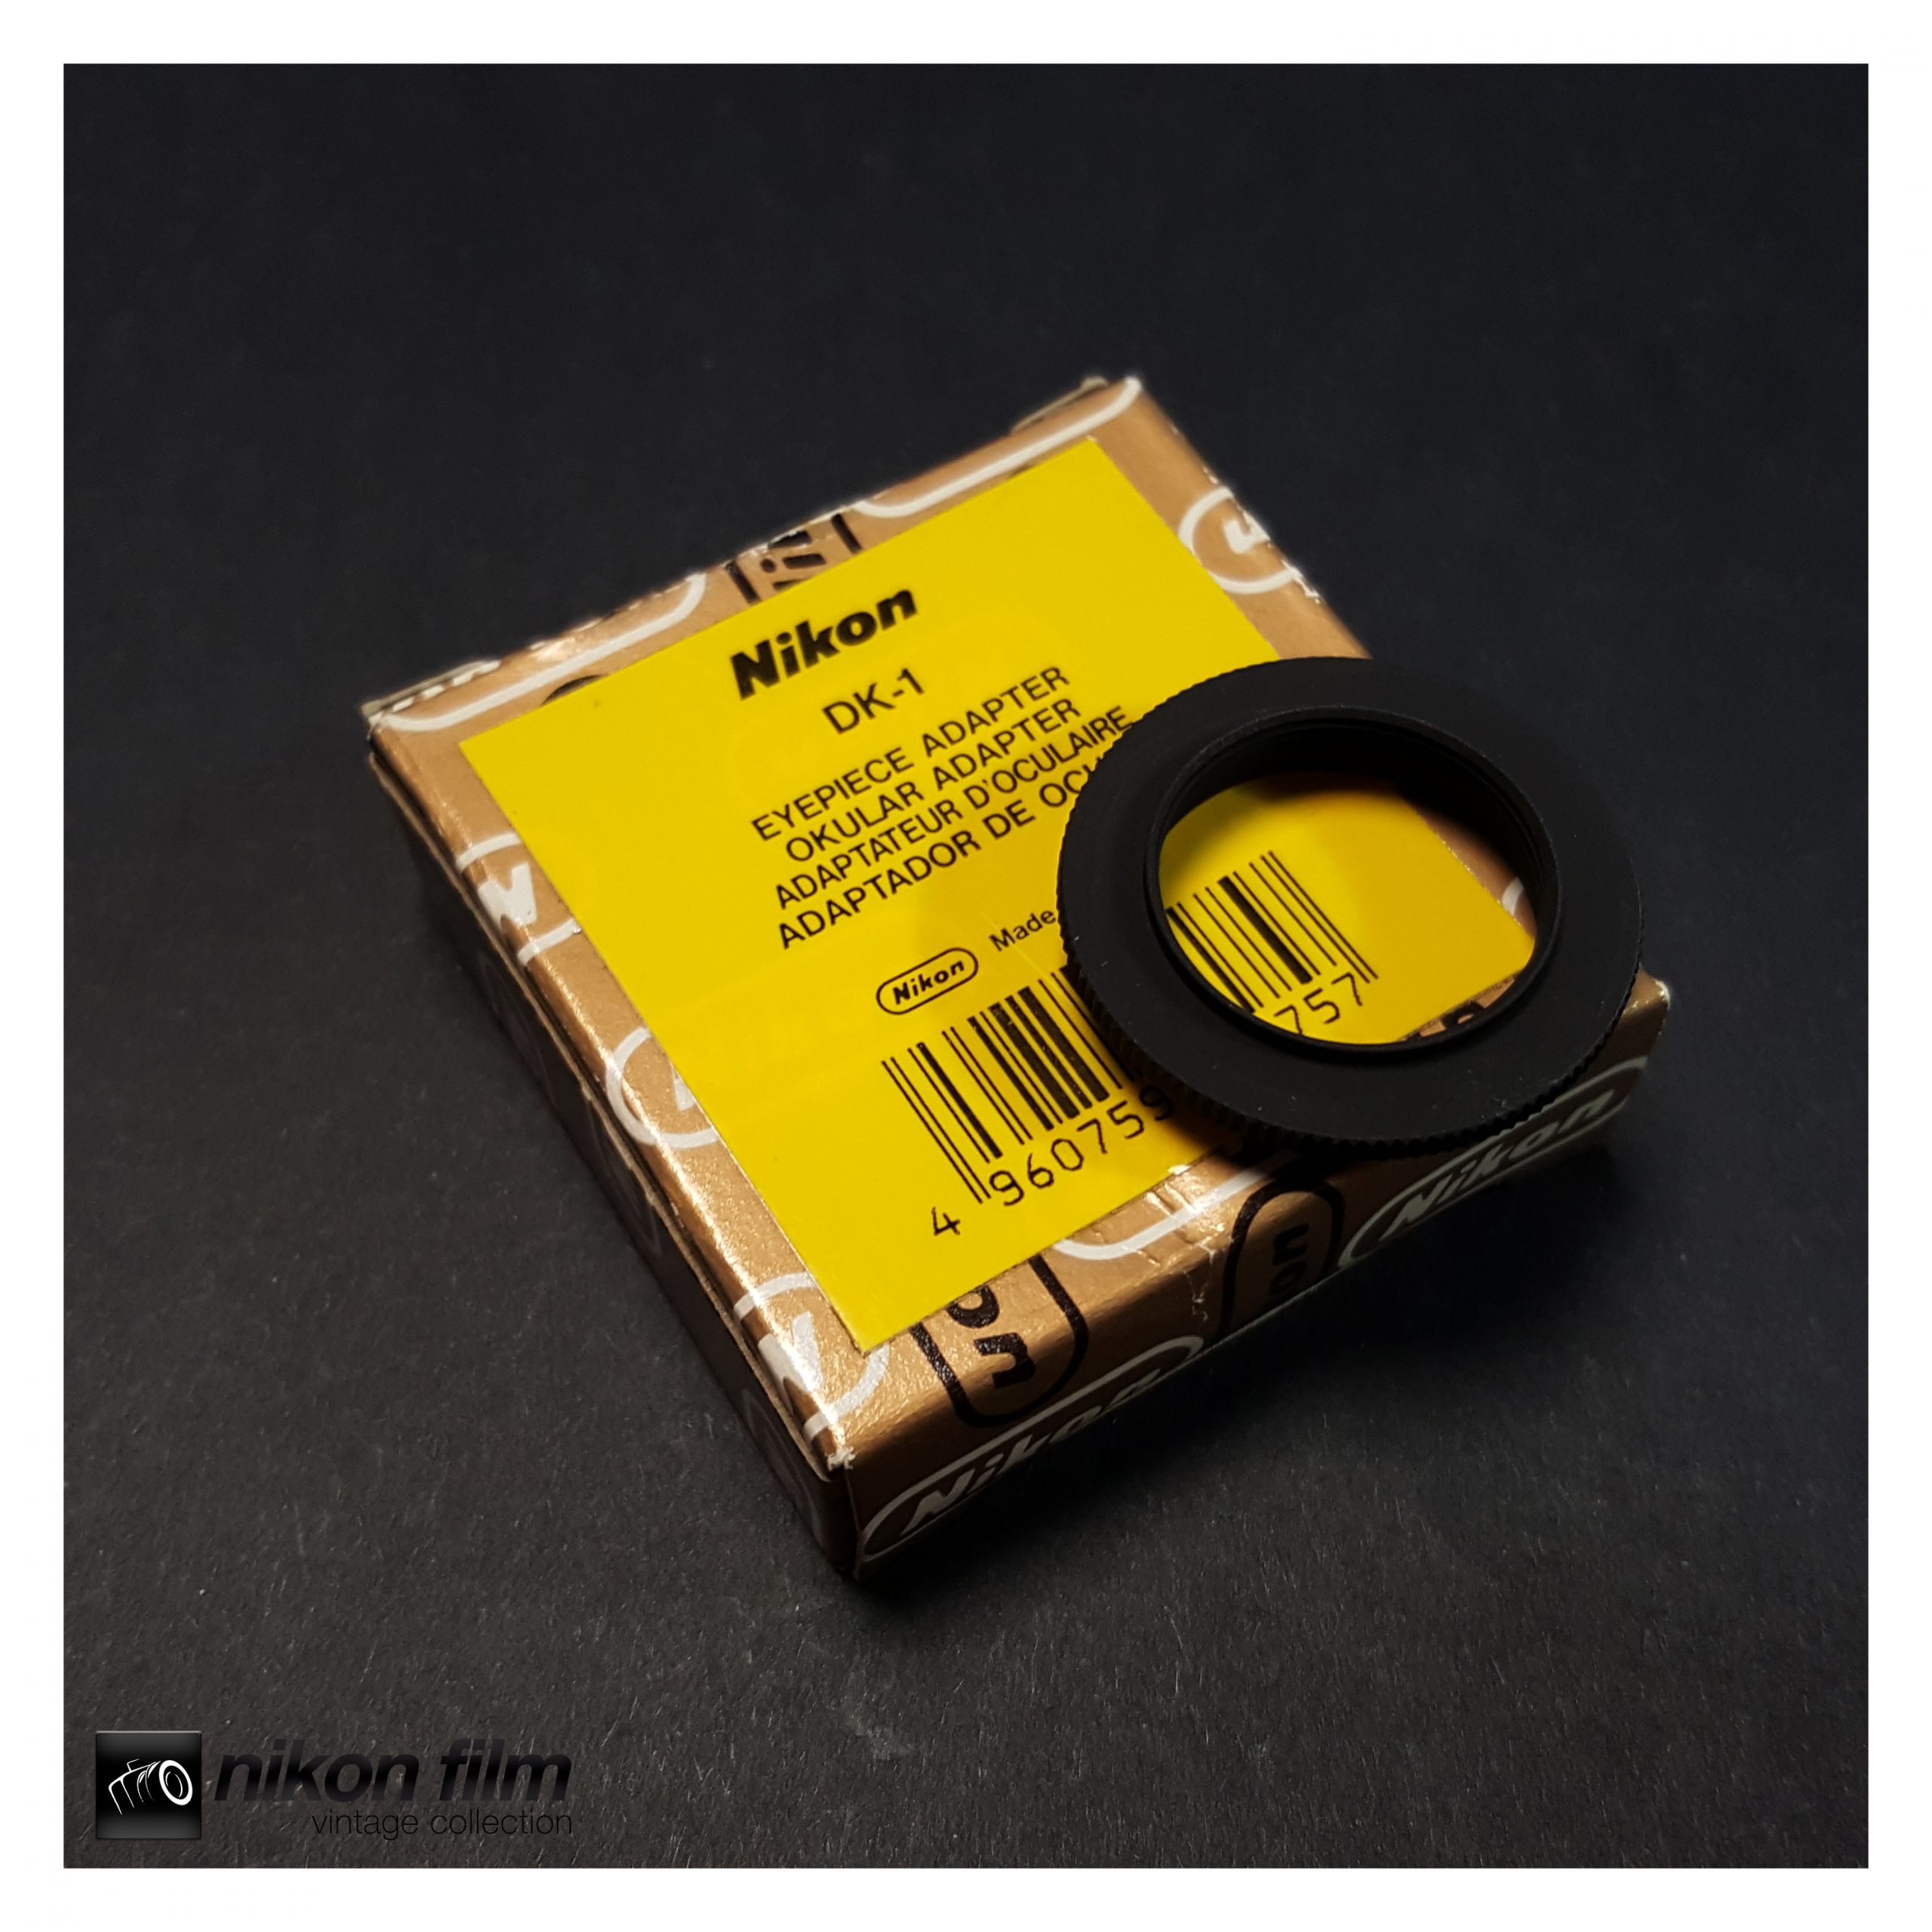 Nikon DK-1 Eyepiece Adapter Boxed